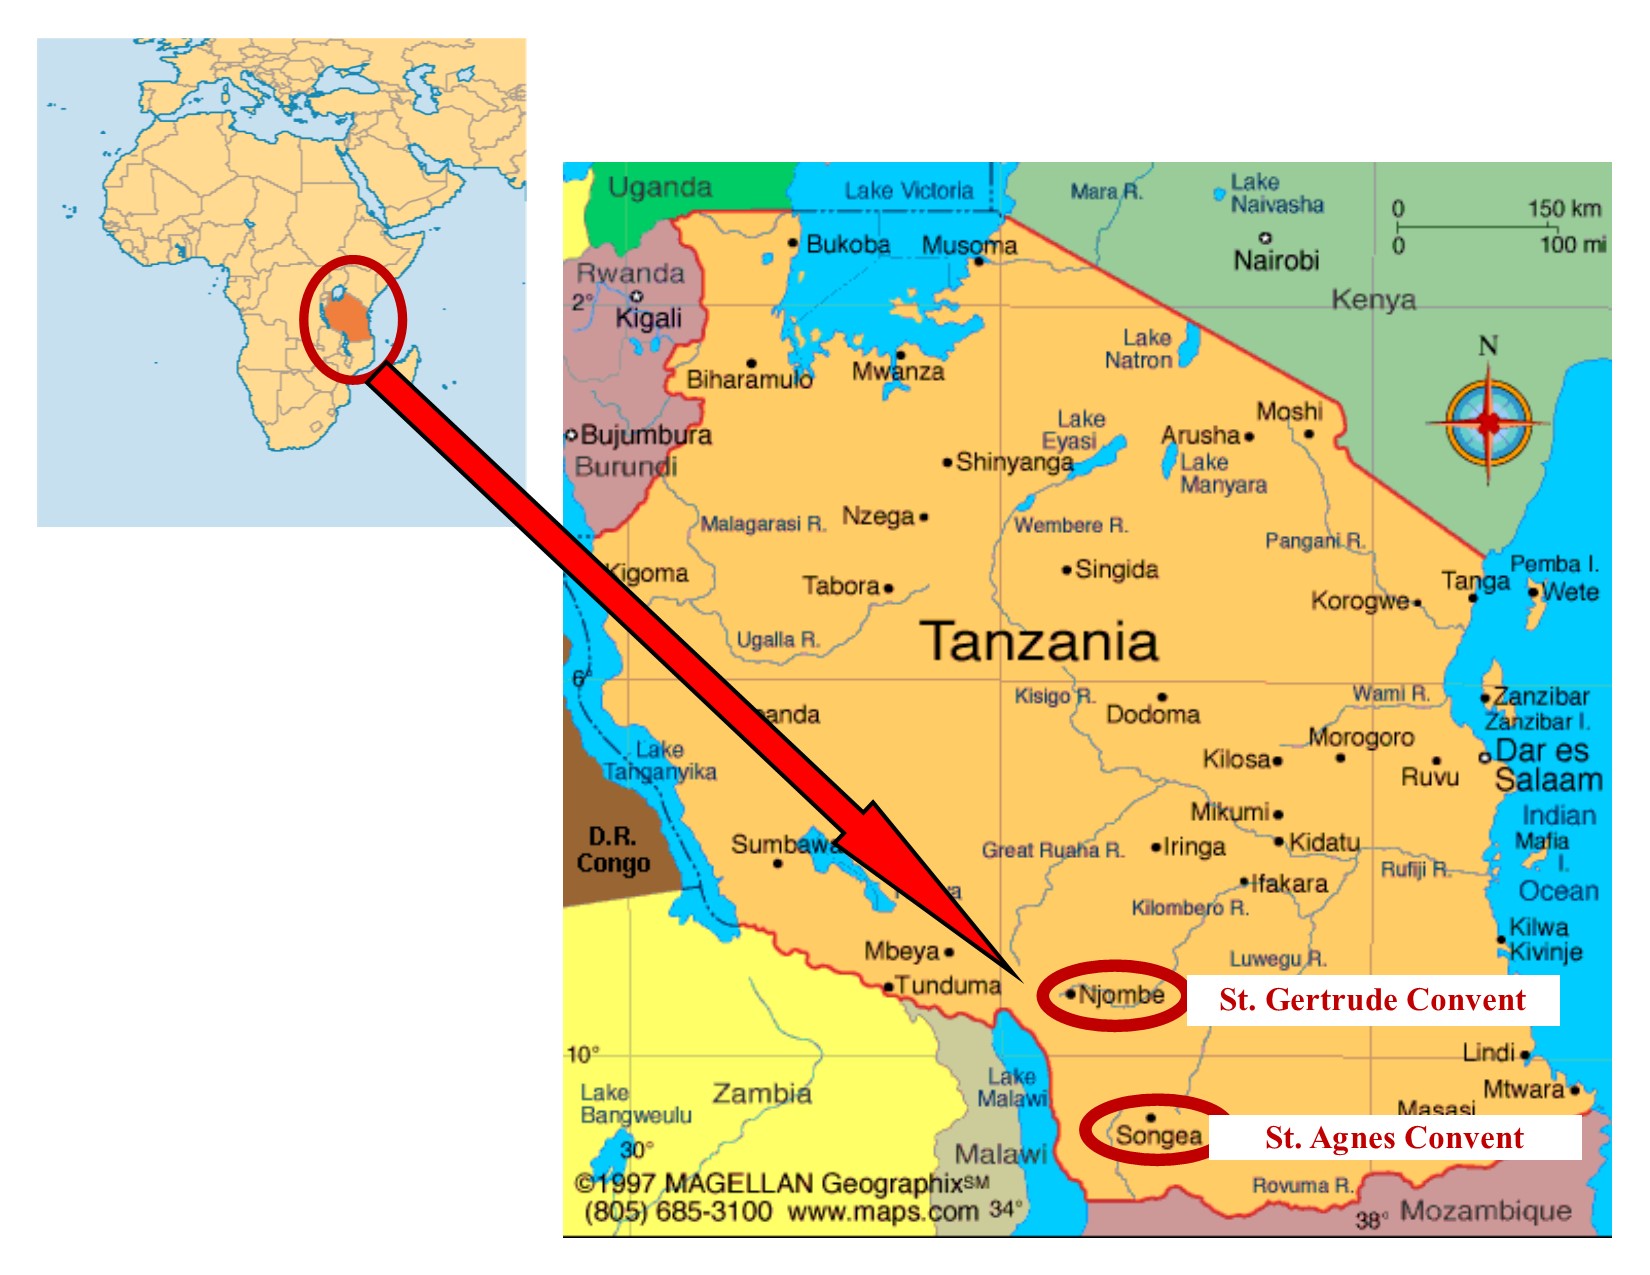 Our Twinning Monasteries in Tanzania